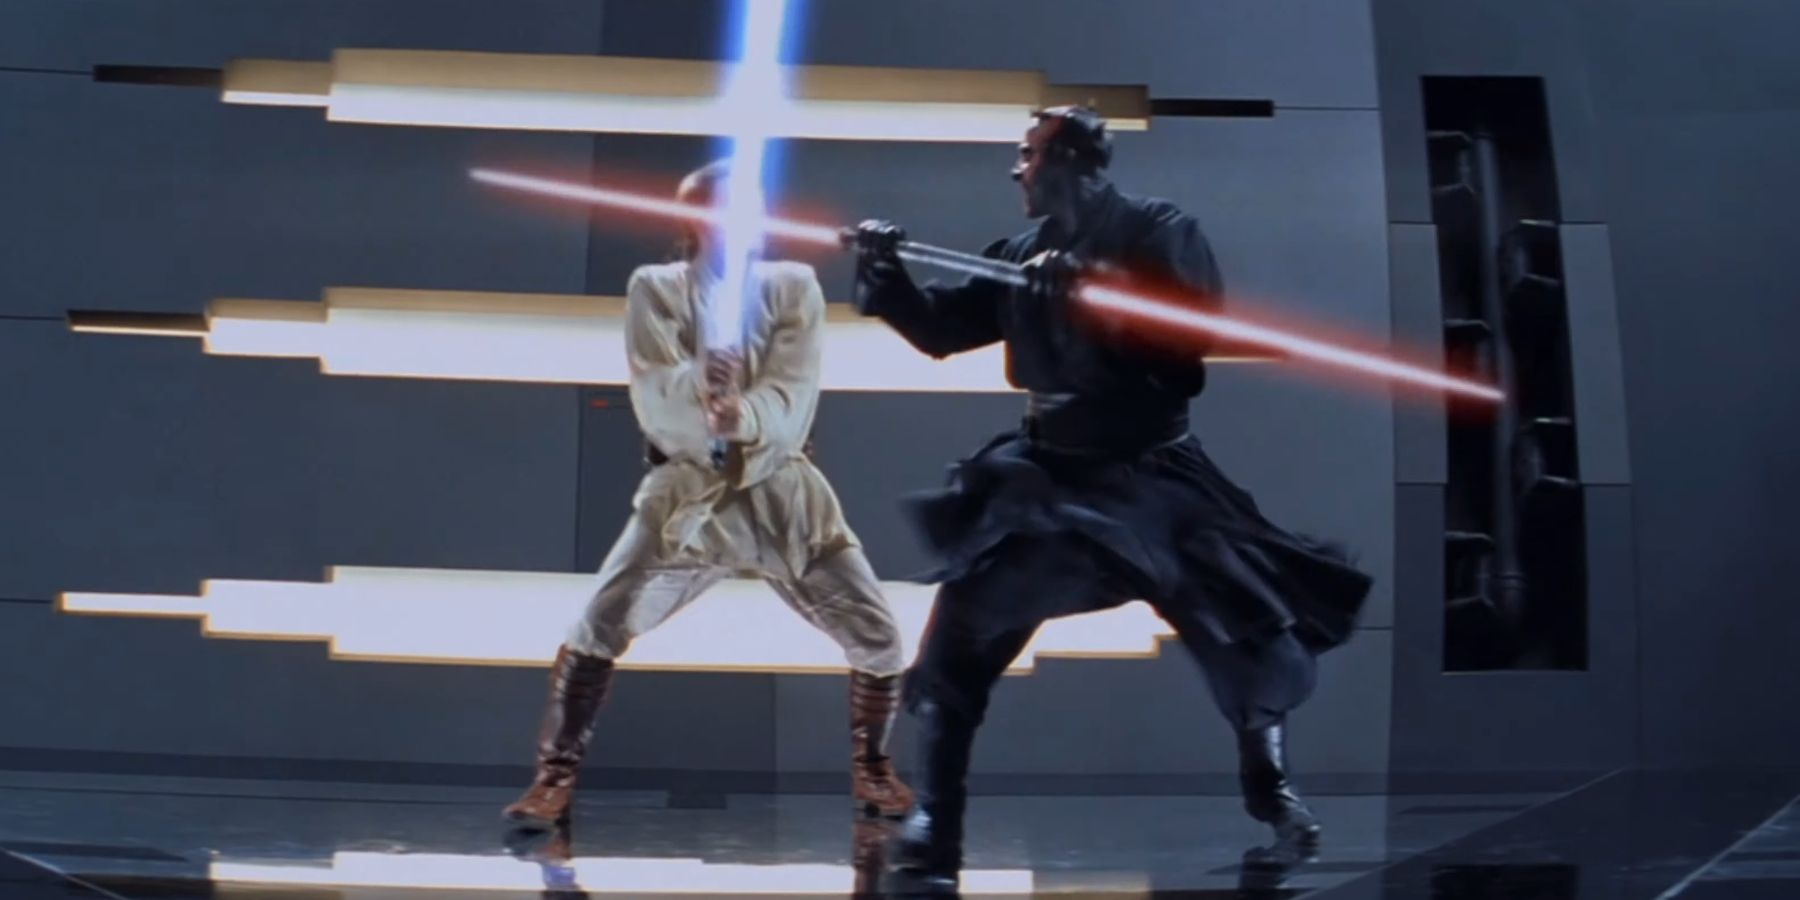 Obi-Wan Kenobi dueling Darth Maul in Star Wars: The Phantom Menace.